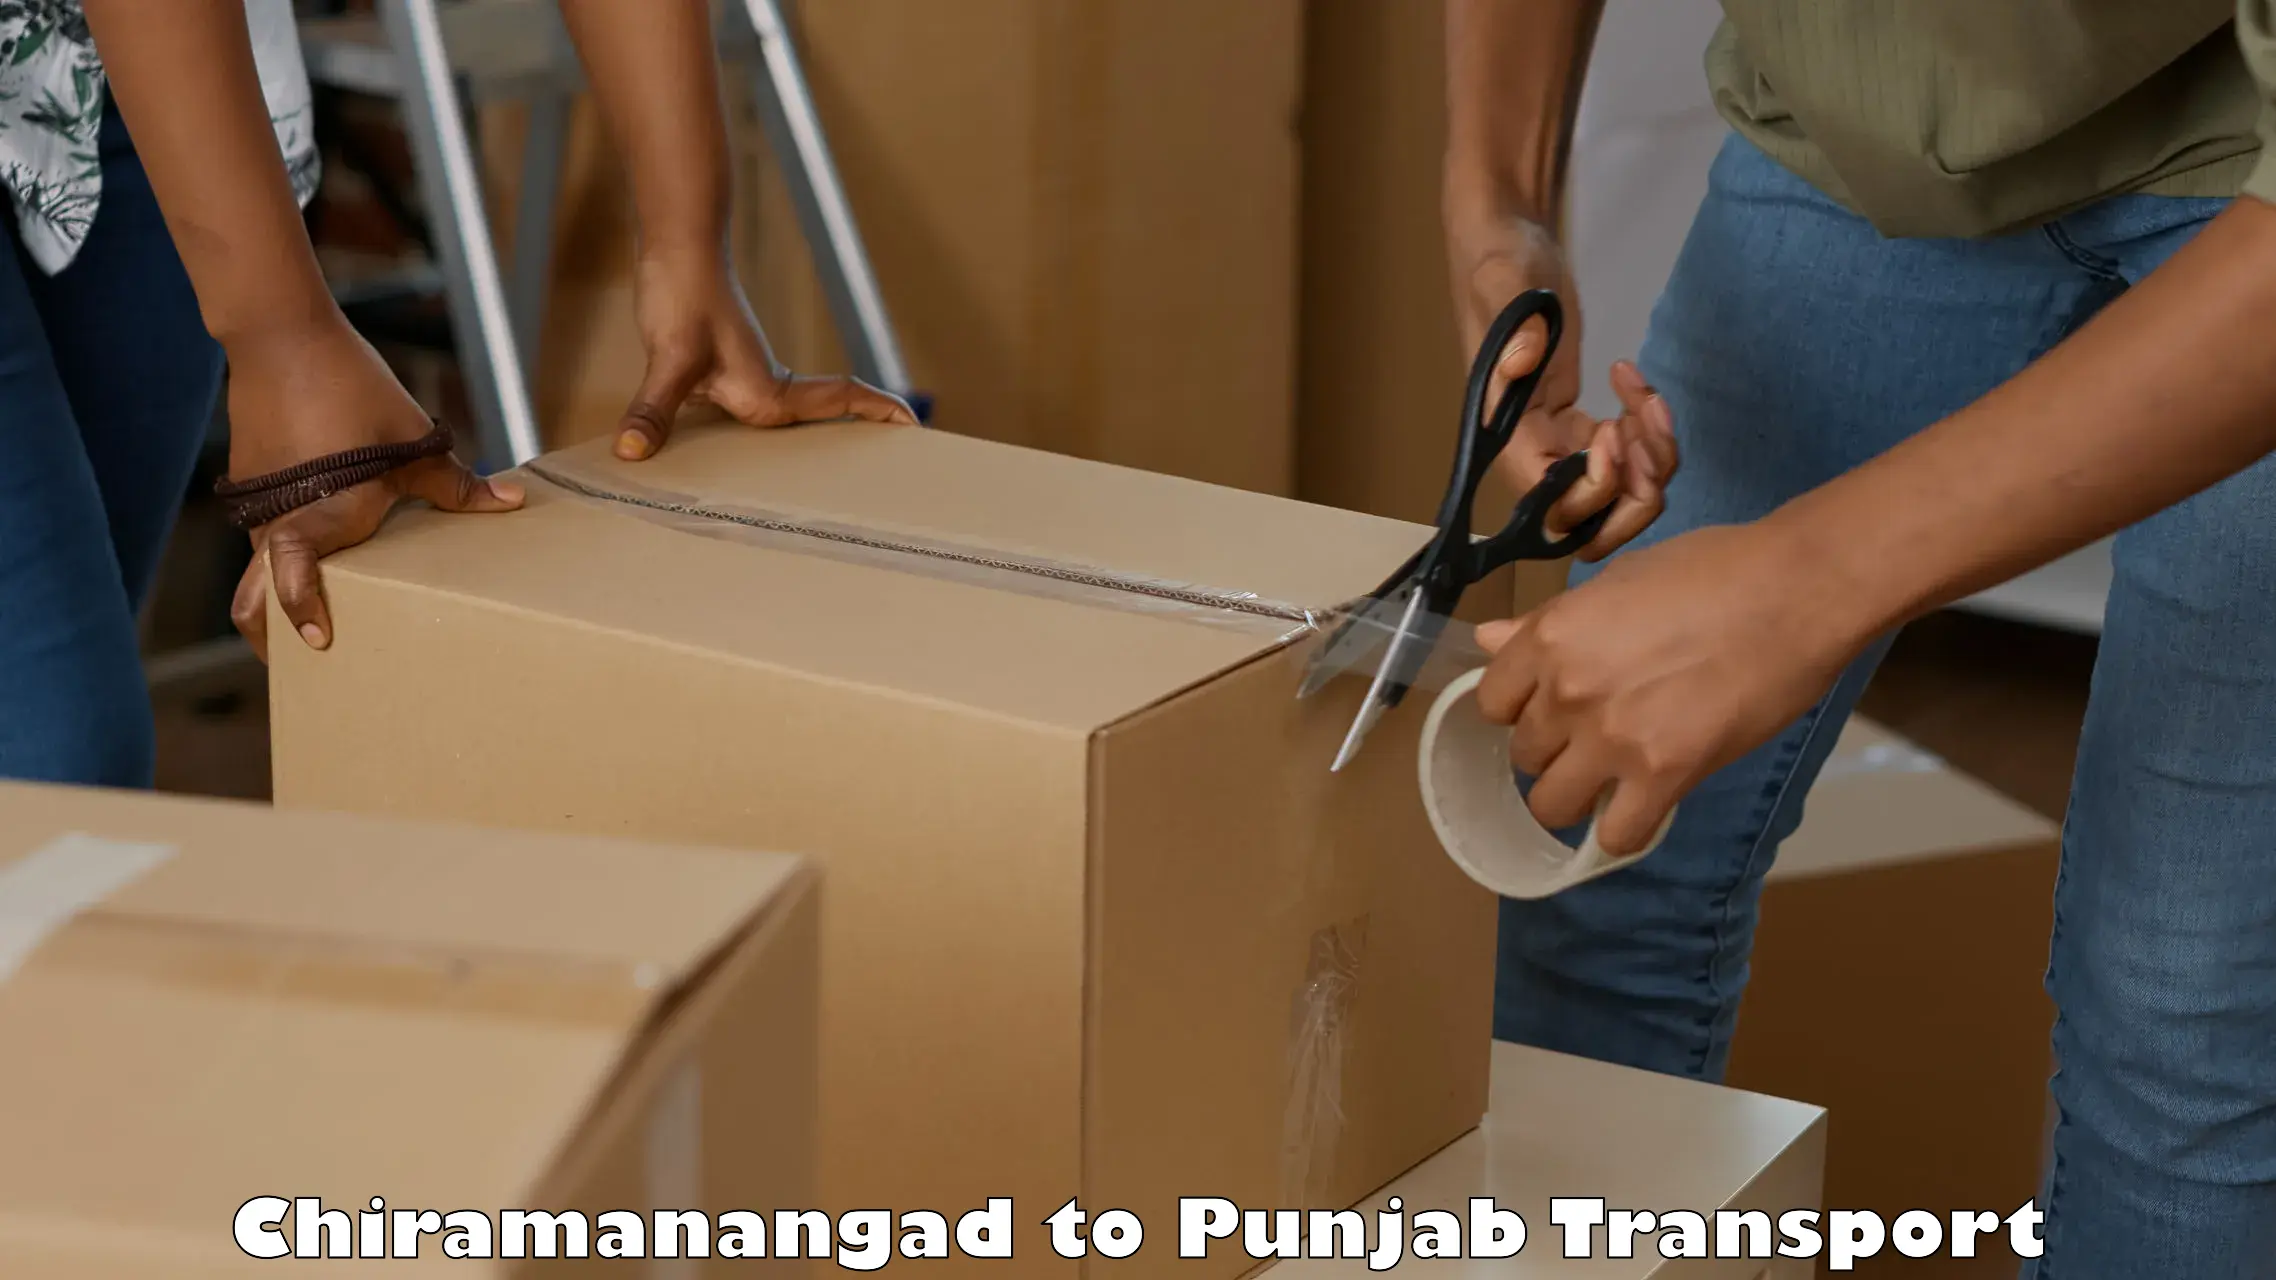 Commercial transport service Chiramanangad to Amritsar